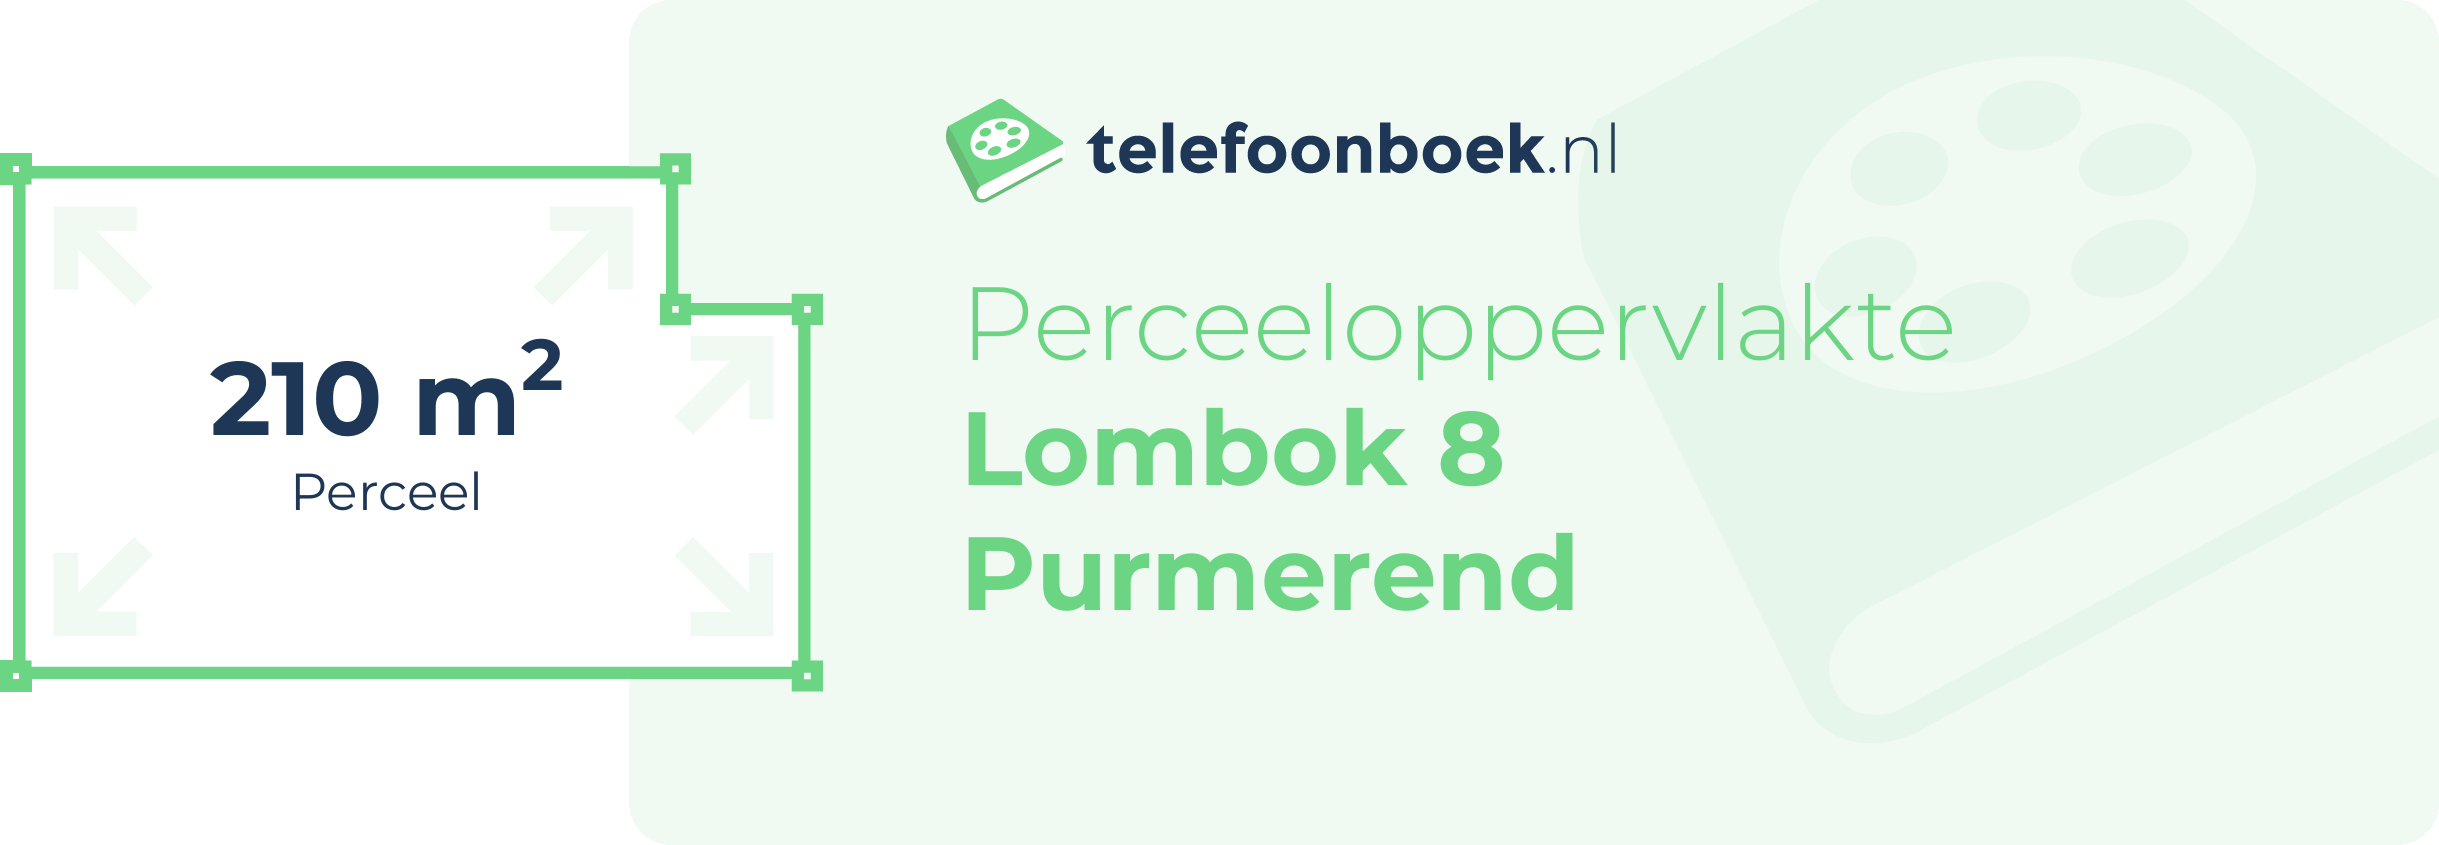 Perceeloppervlakte Lombok 8 Purmerend